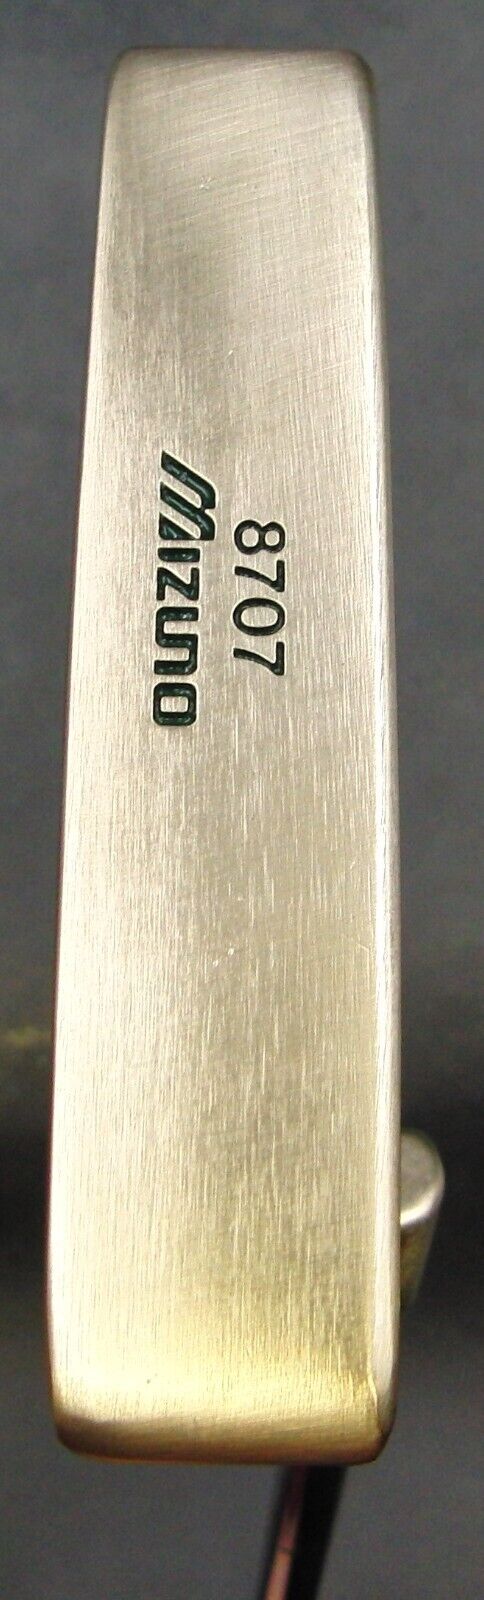 Mizuno 8707 Masters Putter Steel Shaft 88cm Length Mizuno Grip